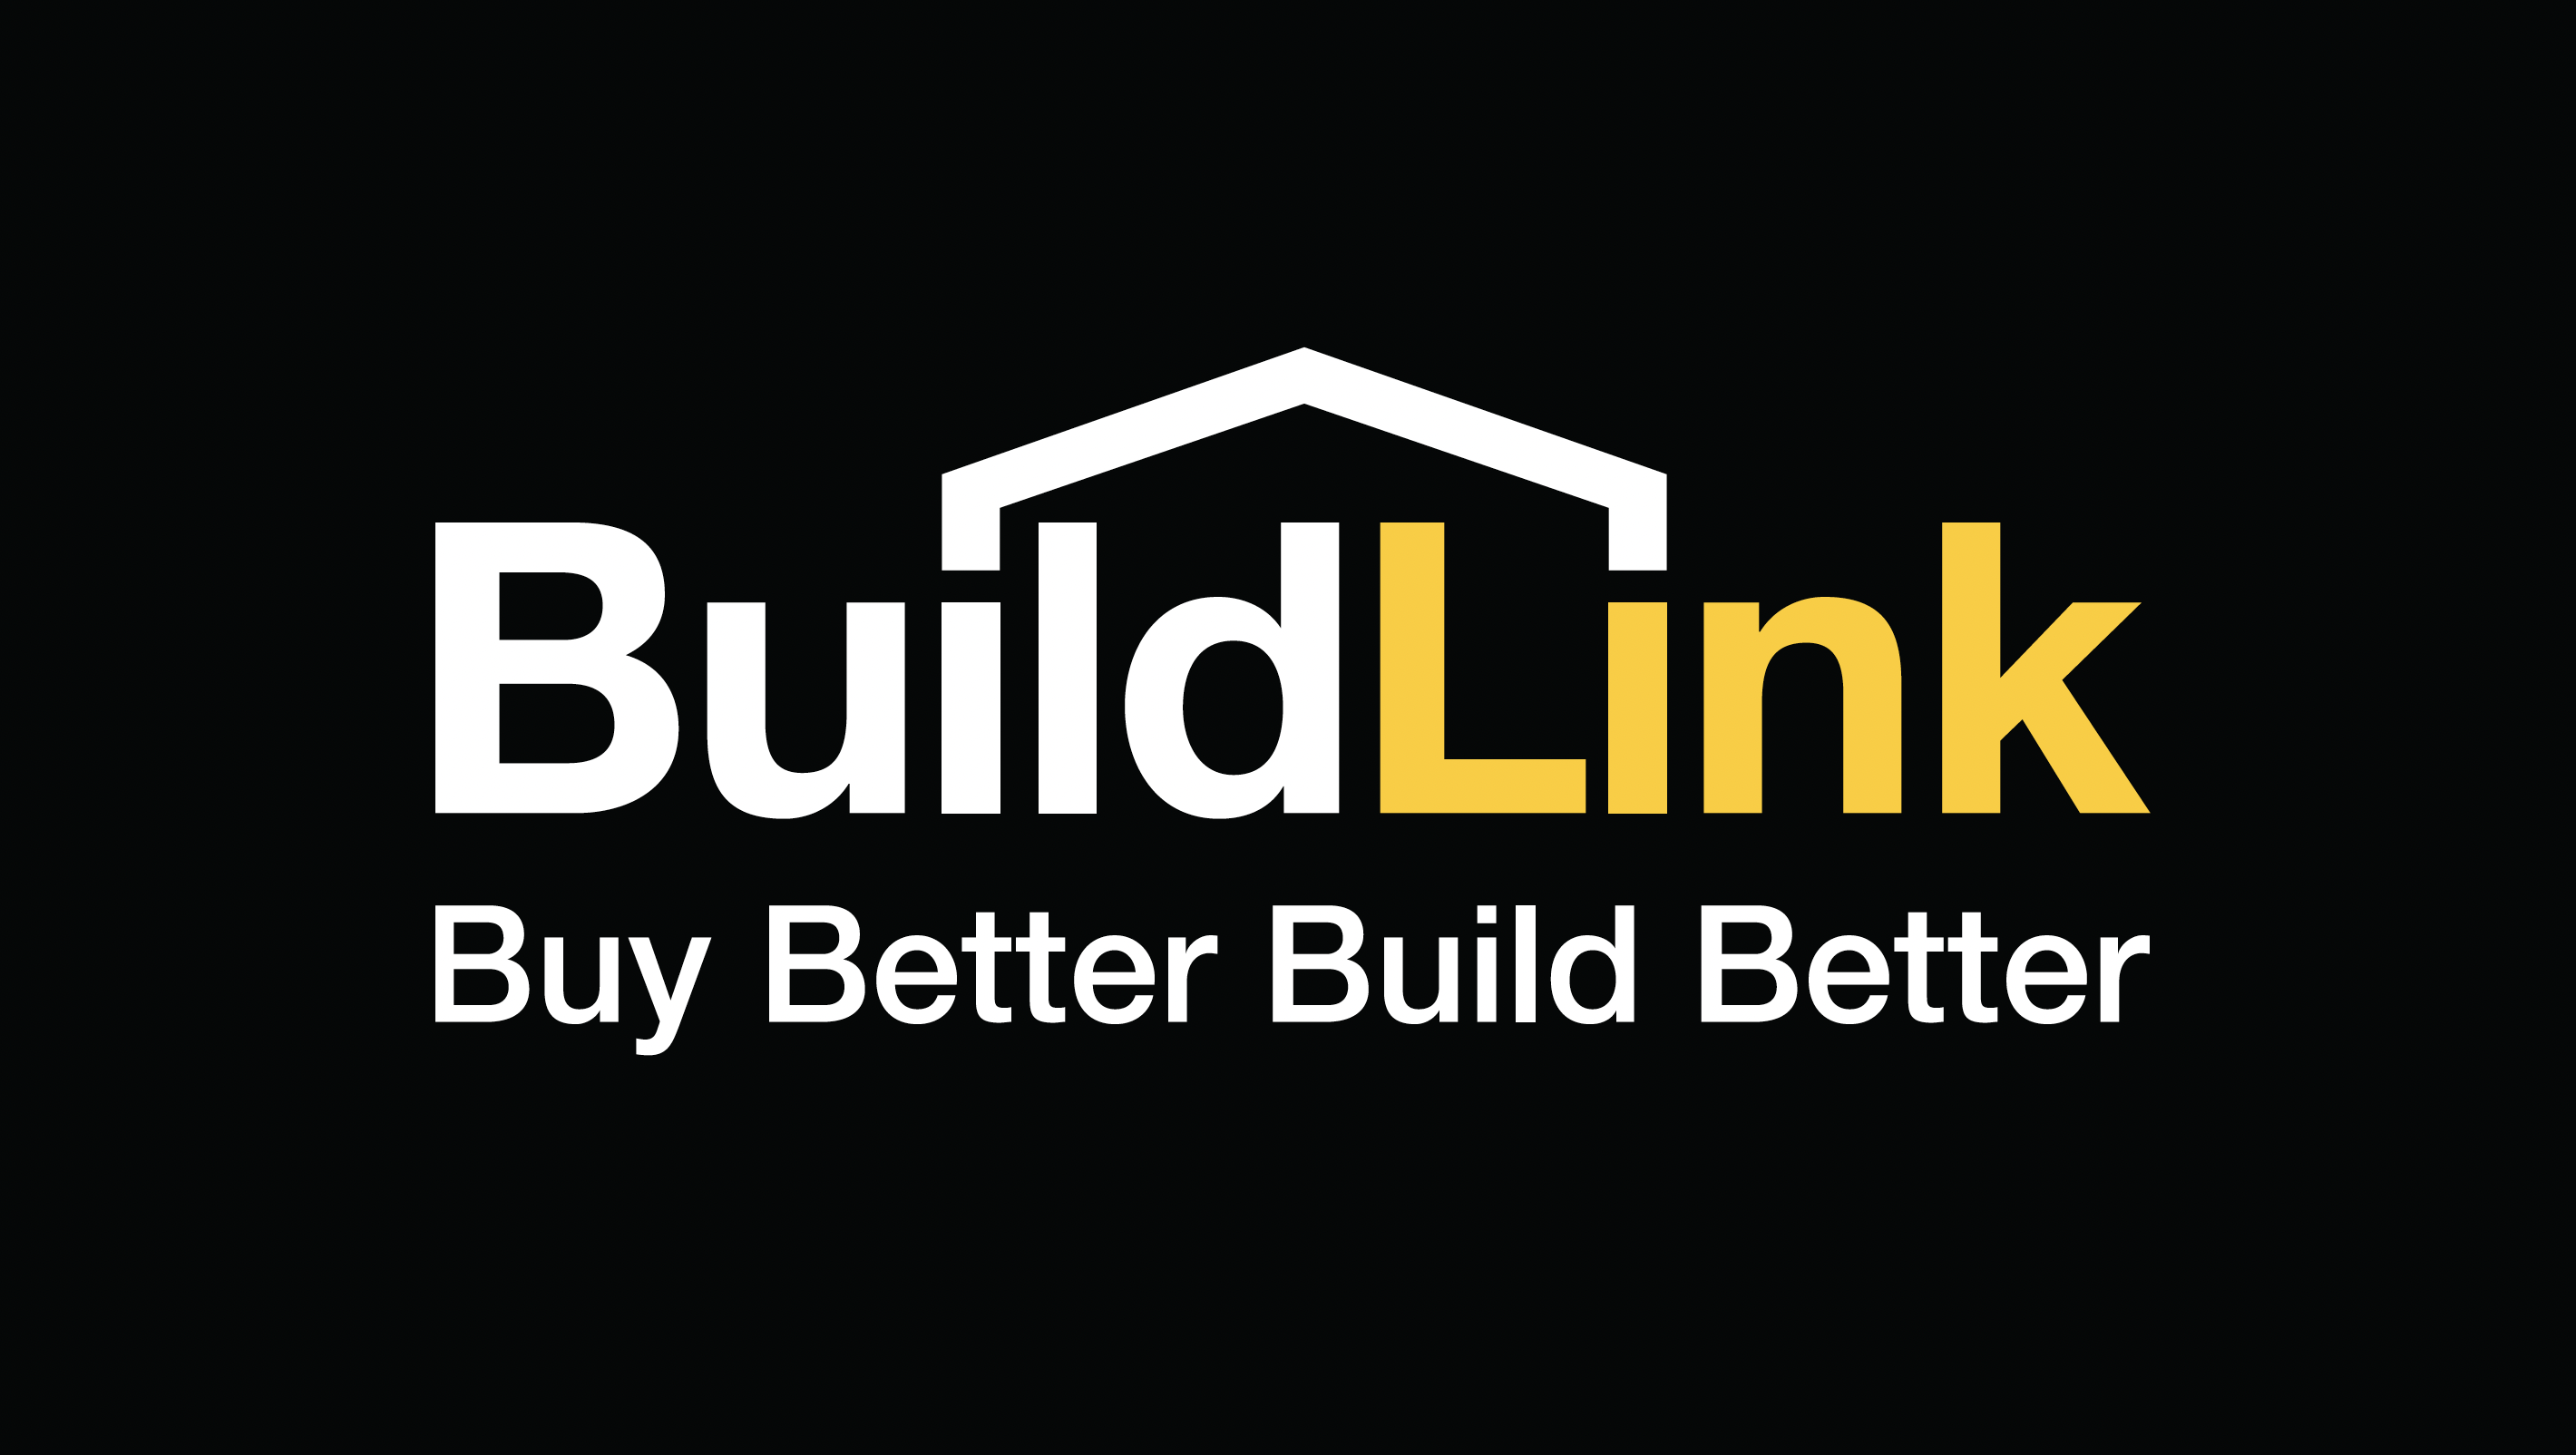 Buildlink